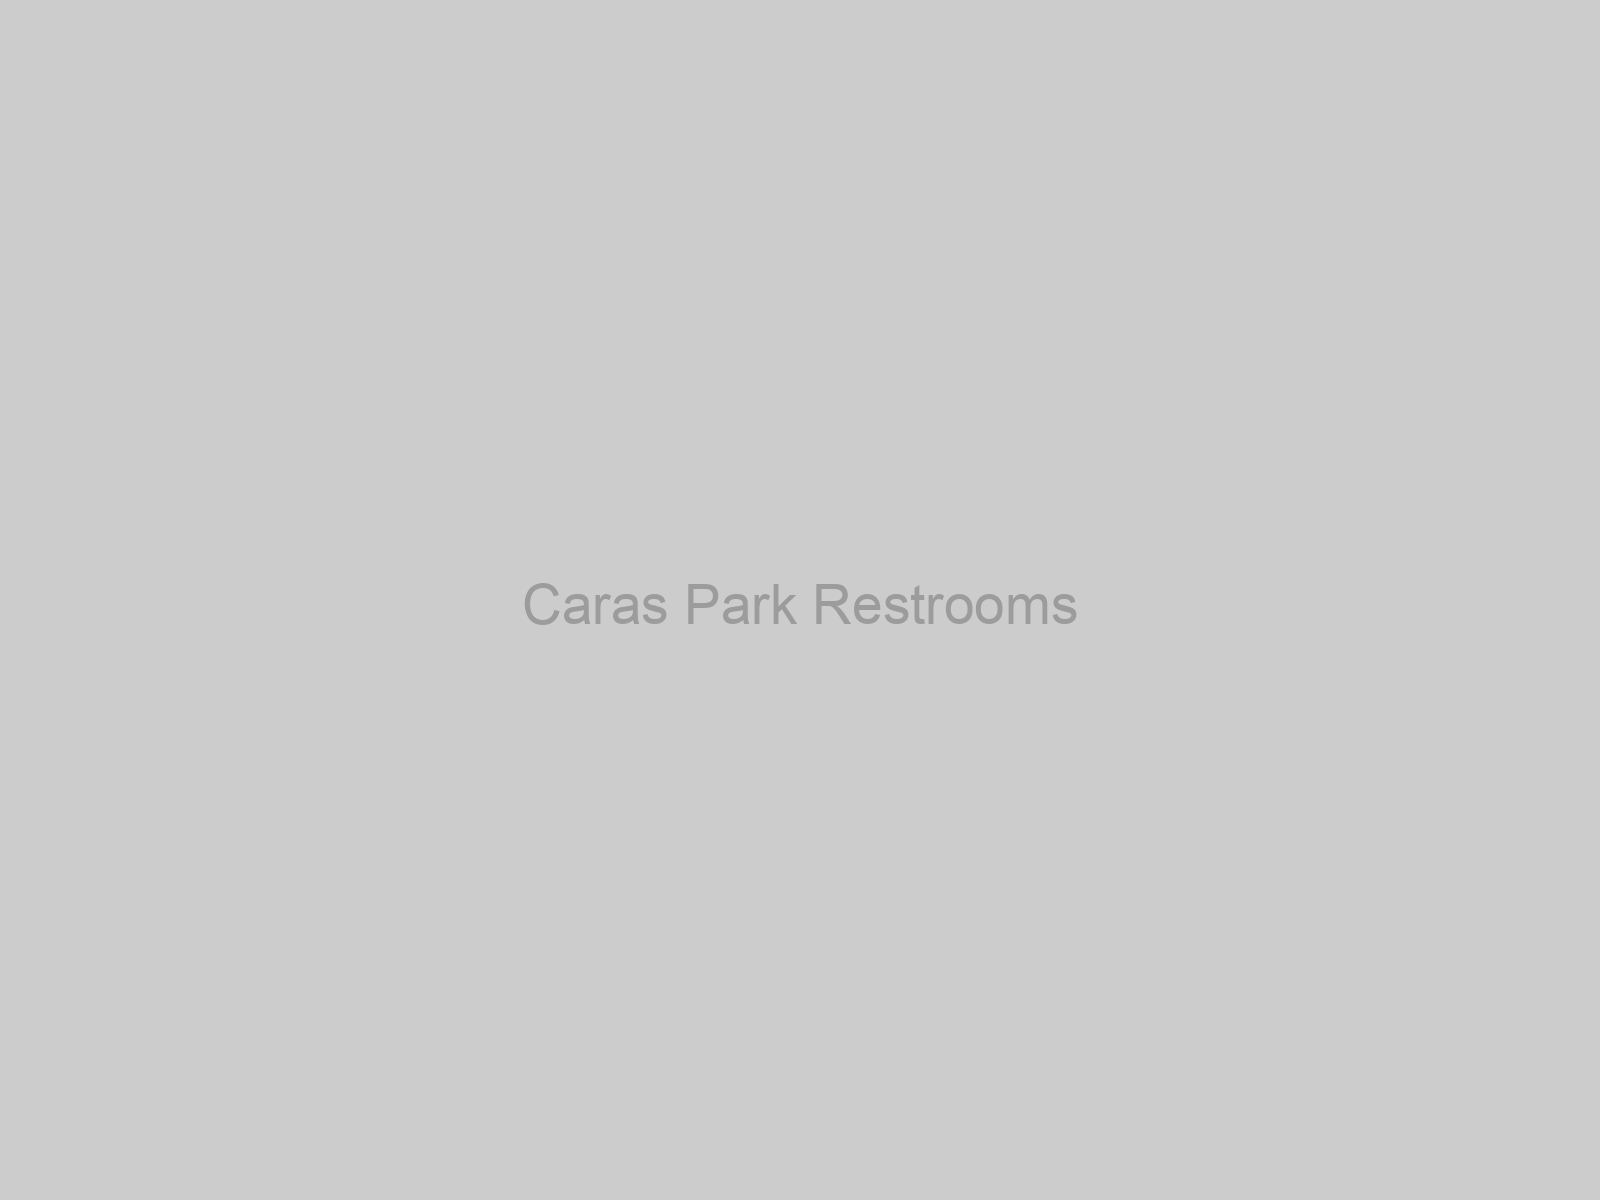 Caras Park Restrooms